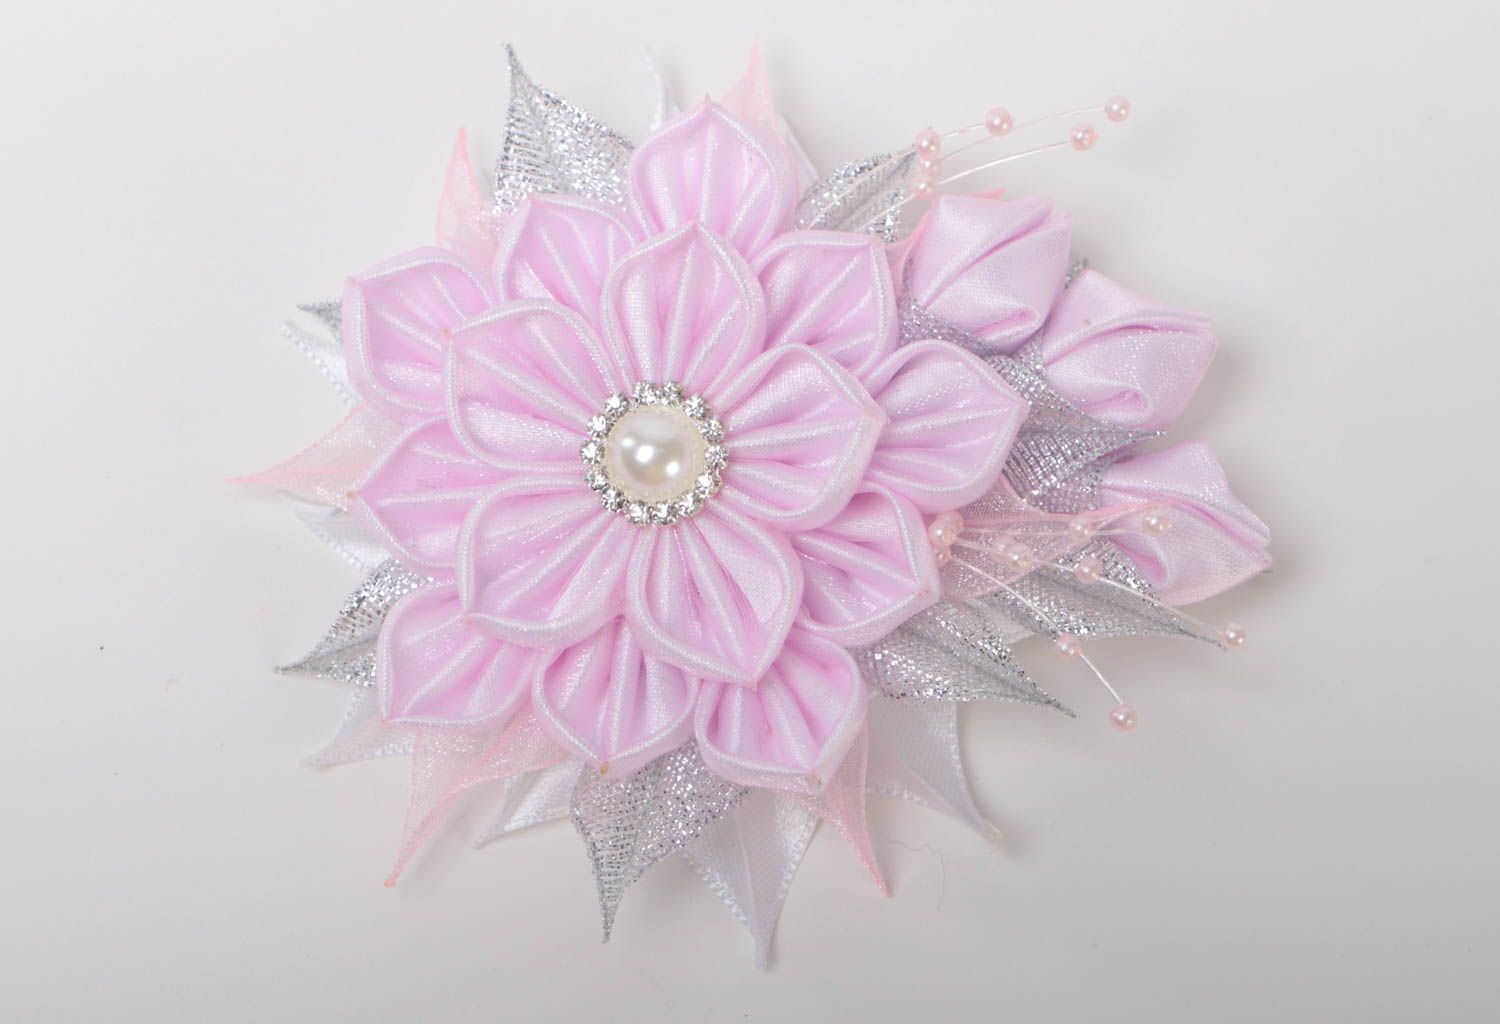 Gentle handmade flower brooch textile floristry fashion accessories gift ideas photo 2